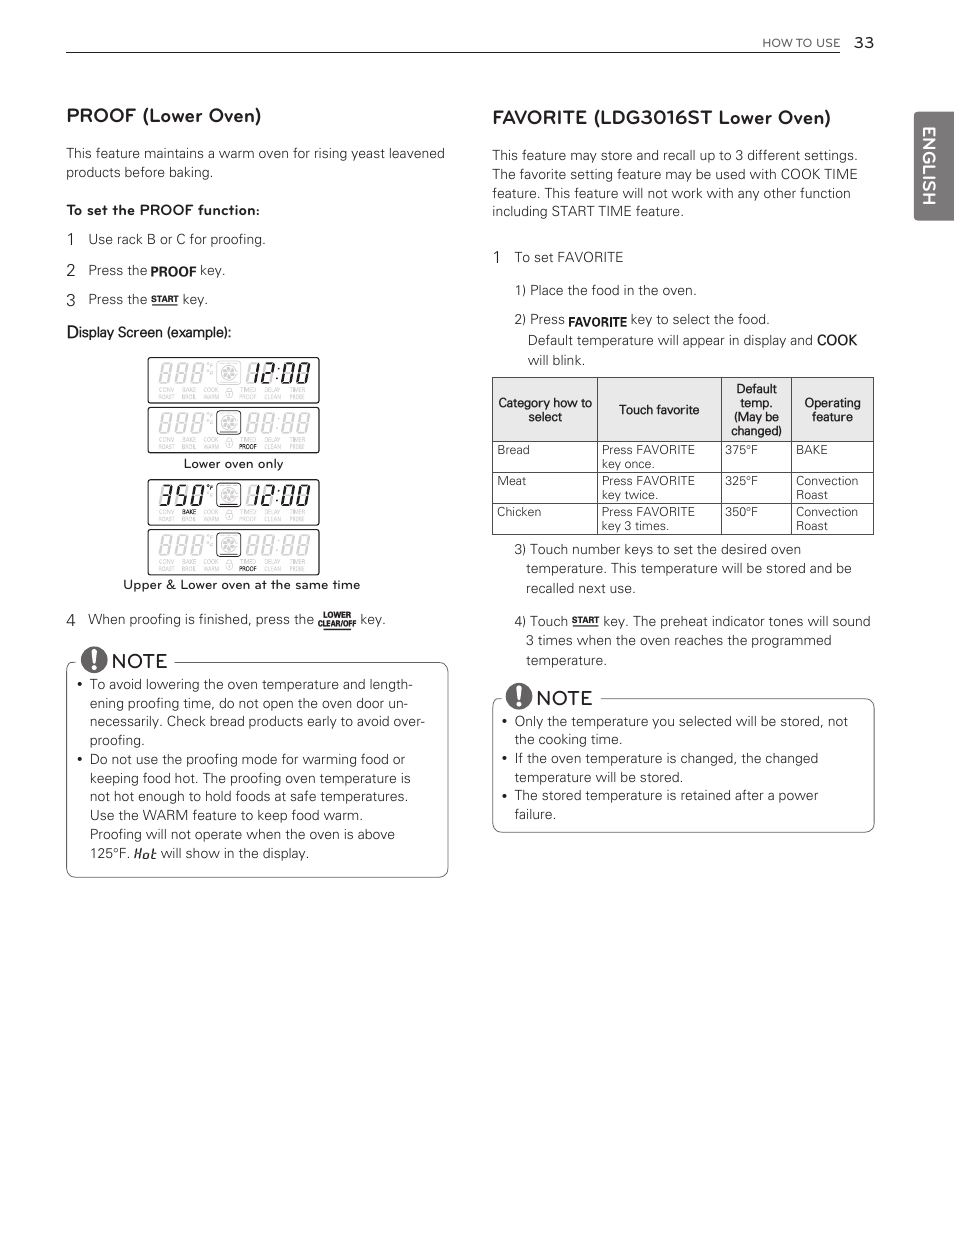 Favorite (ldg3016st lower oven), Proof (lower oven), English | LG LDG3016ST  EN User Manual | Page 33 / 47